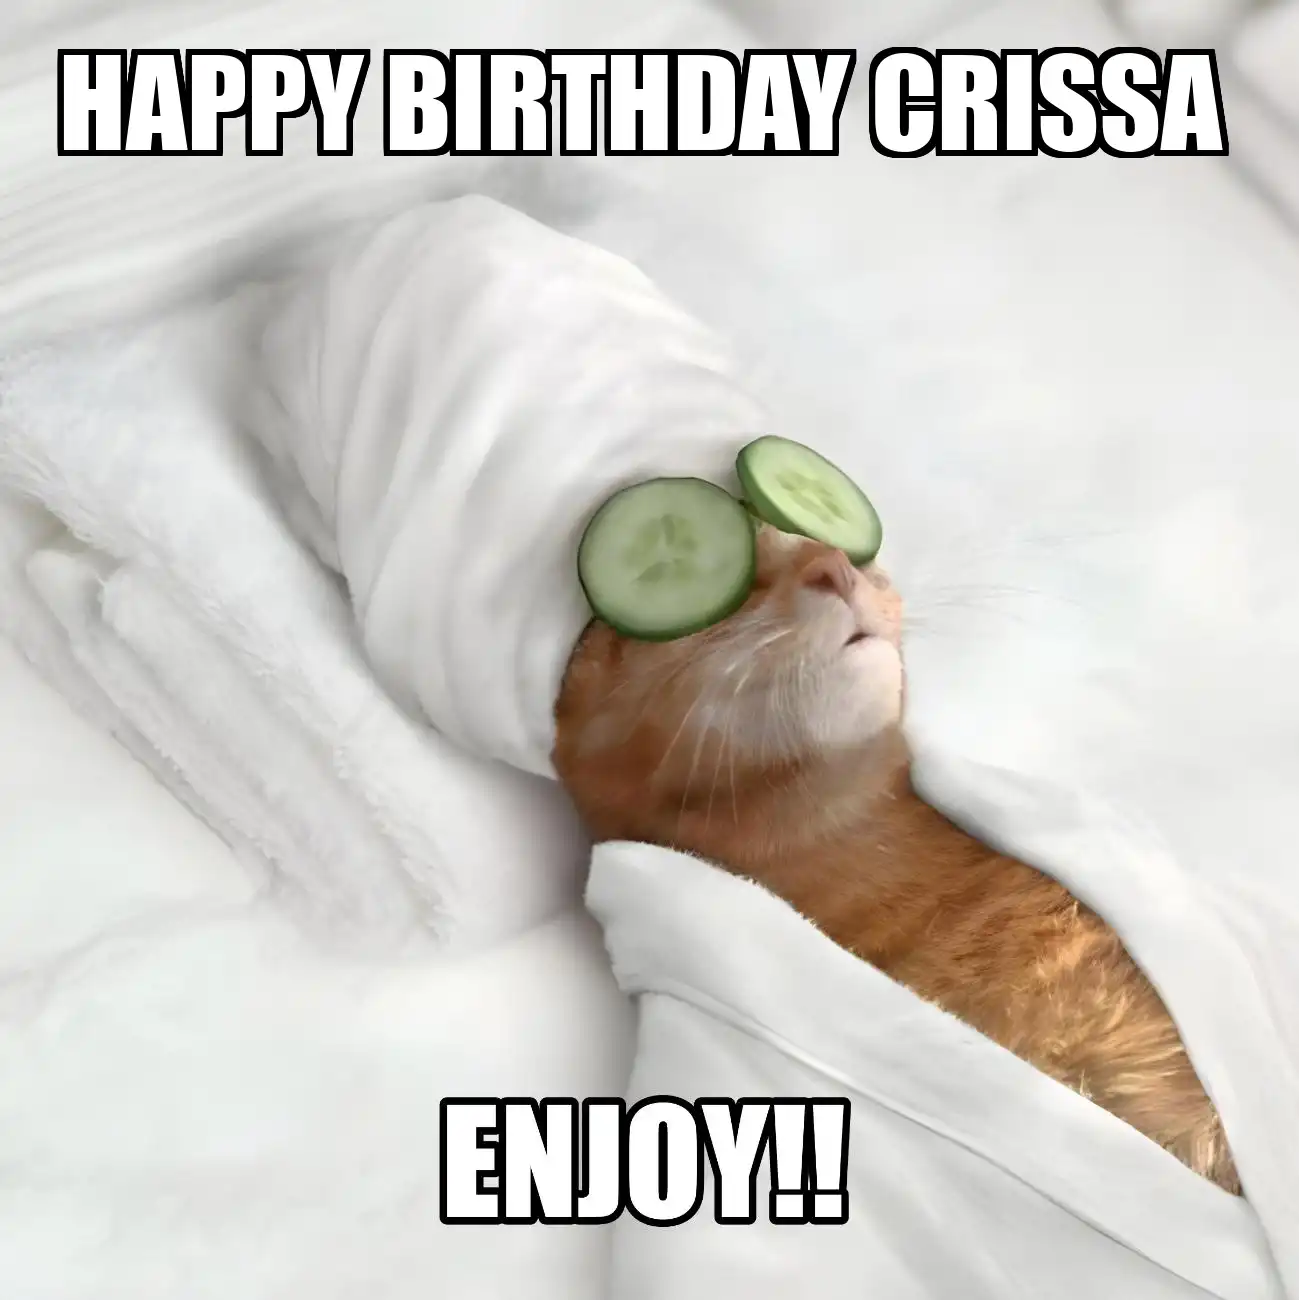 Happy Birthday Crissa Enjoy Cat Meme